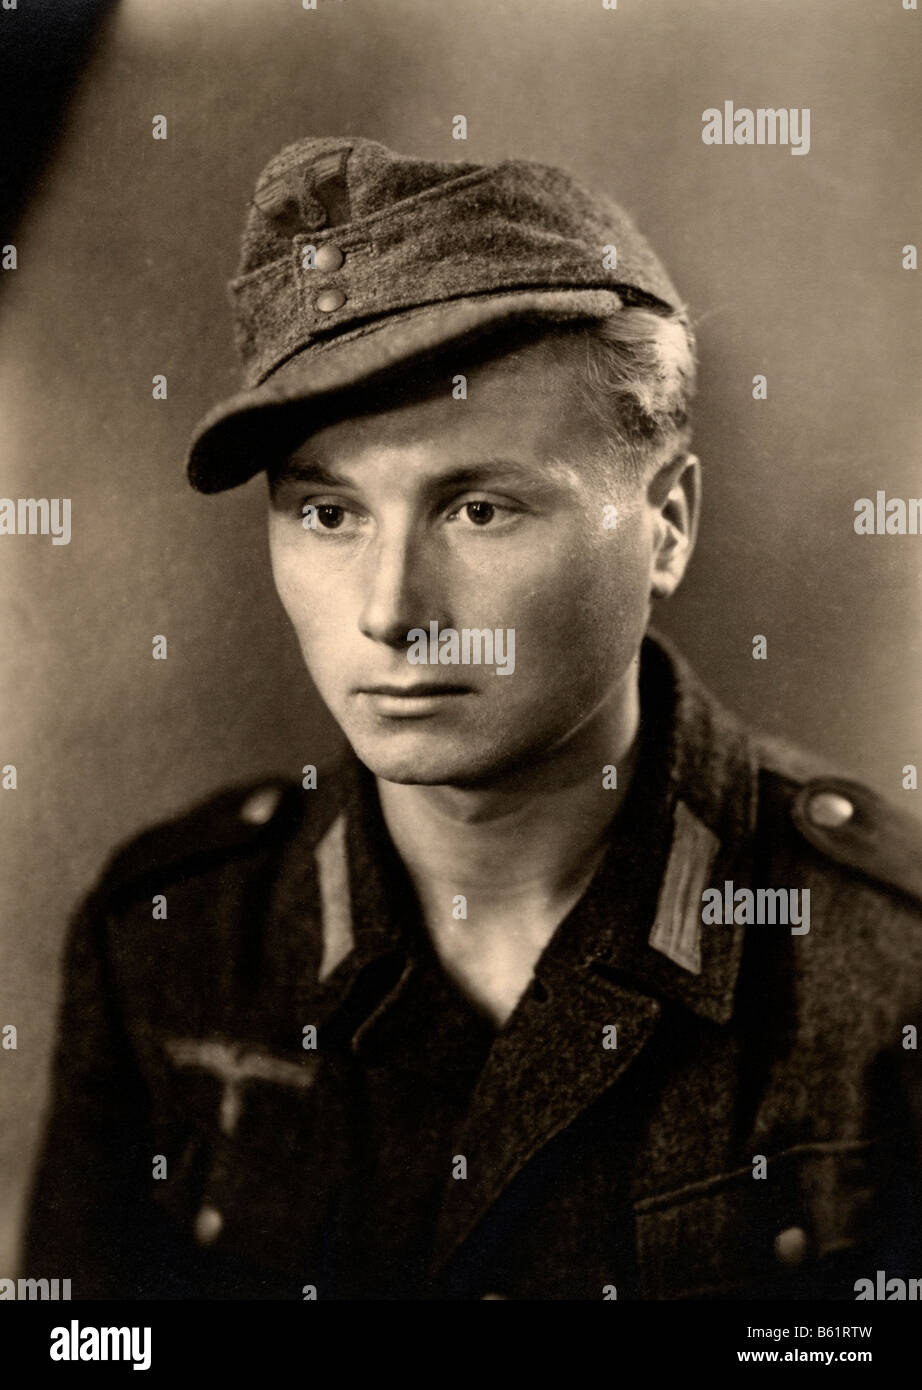 Historical photo, soldier in uniform, portrait, 1944 Stock Photo